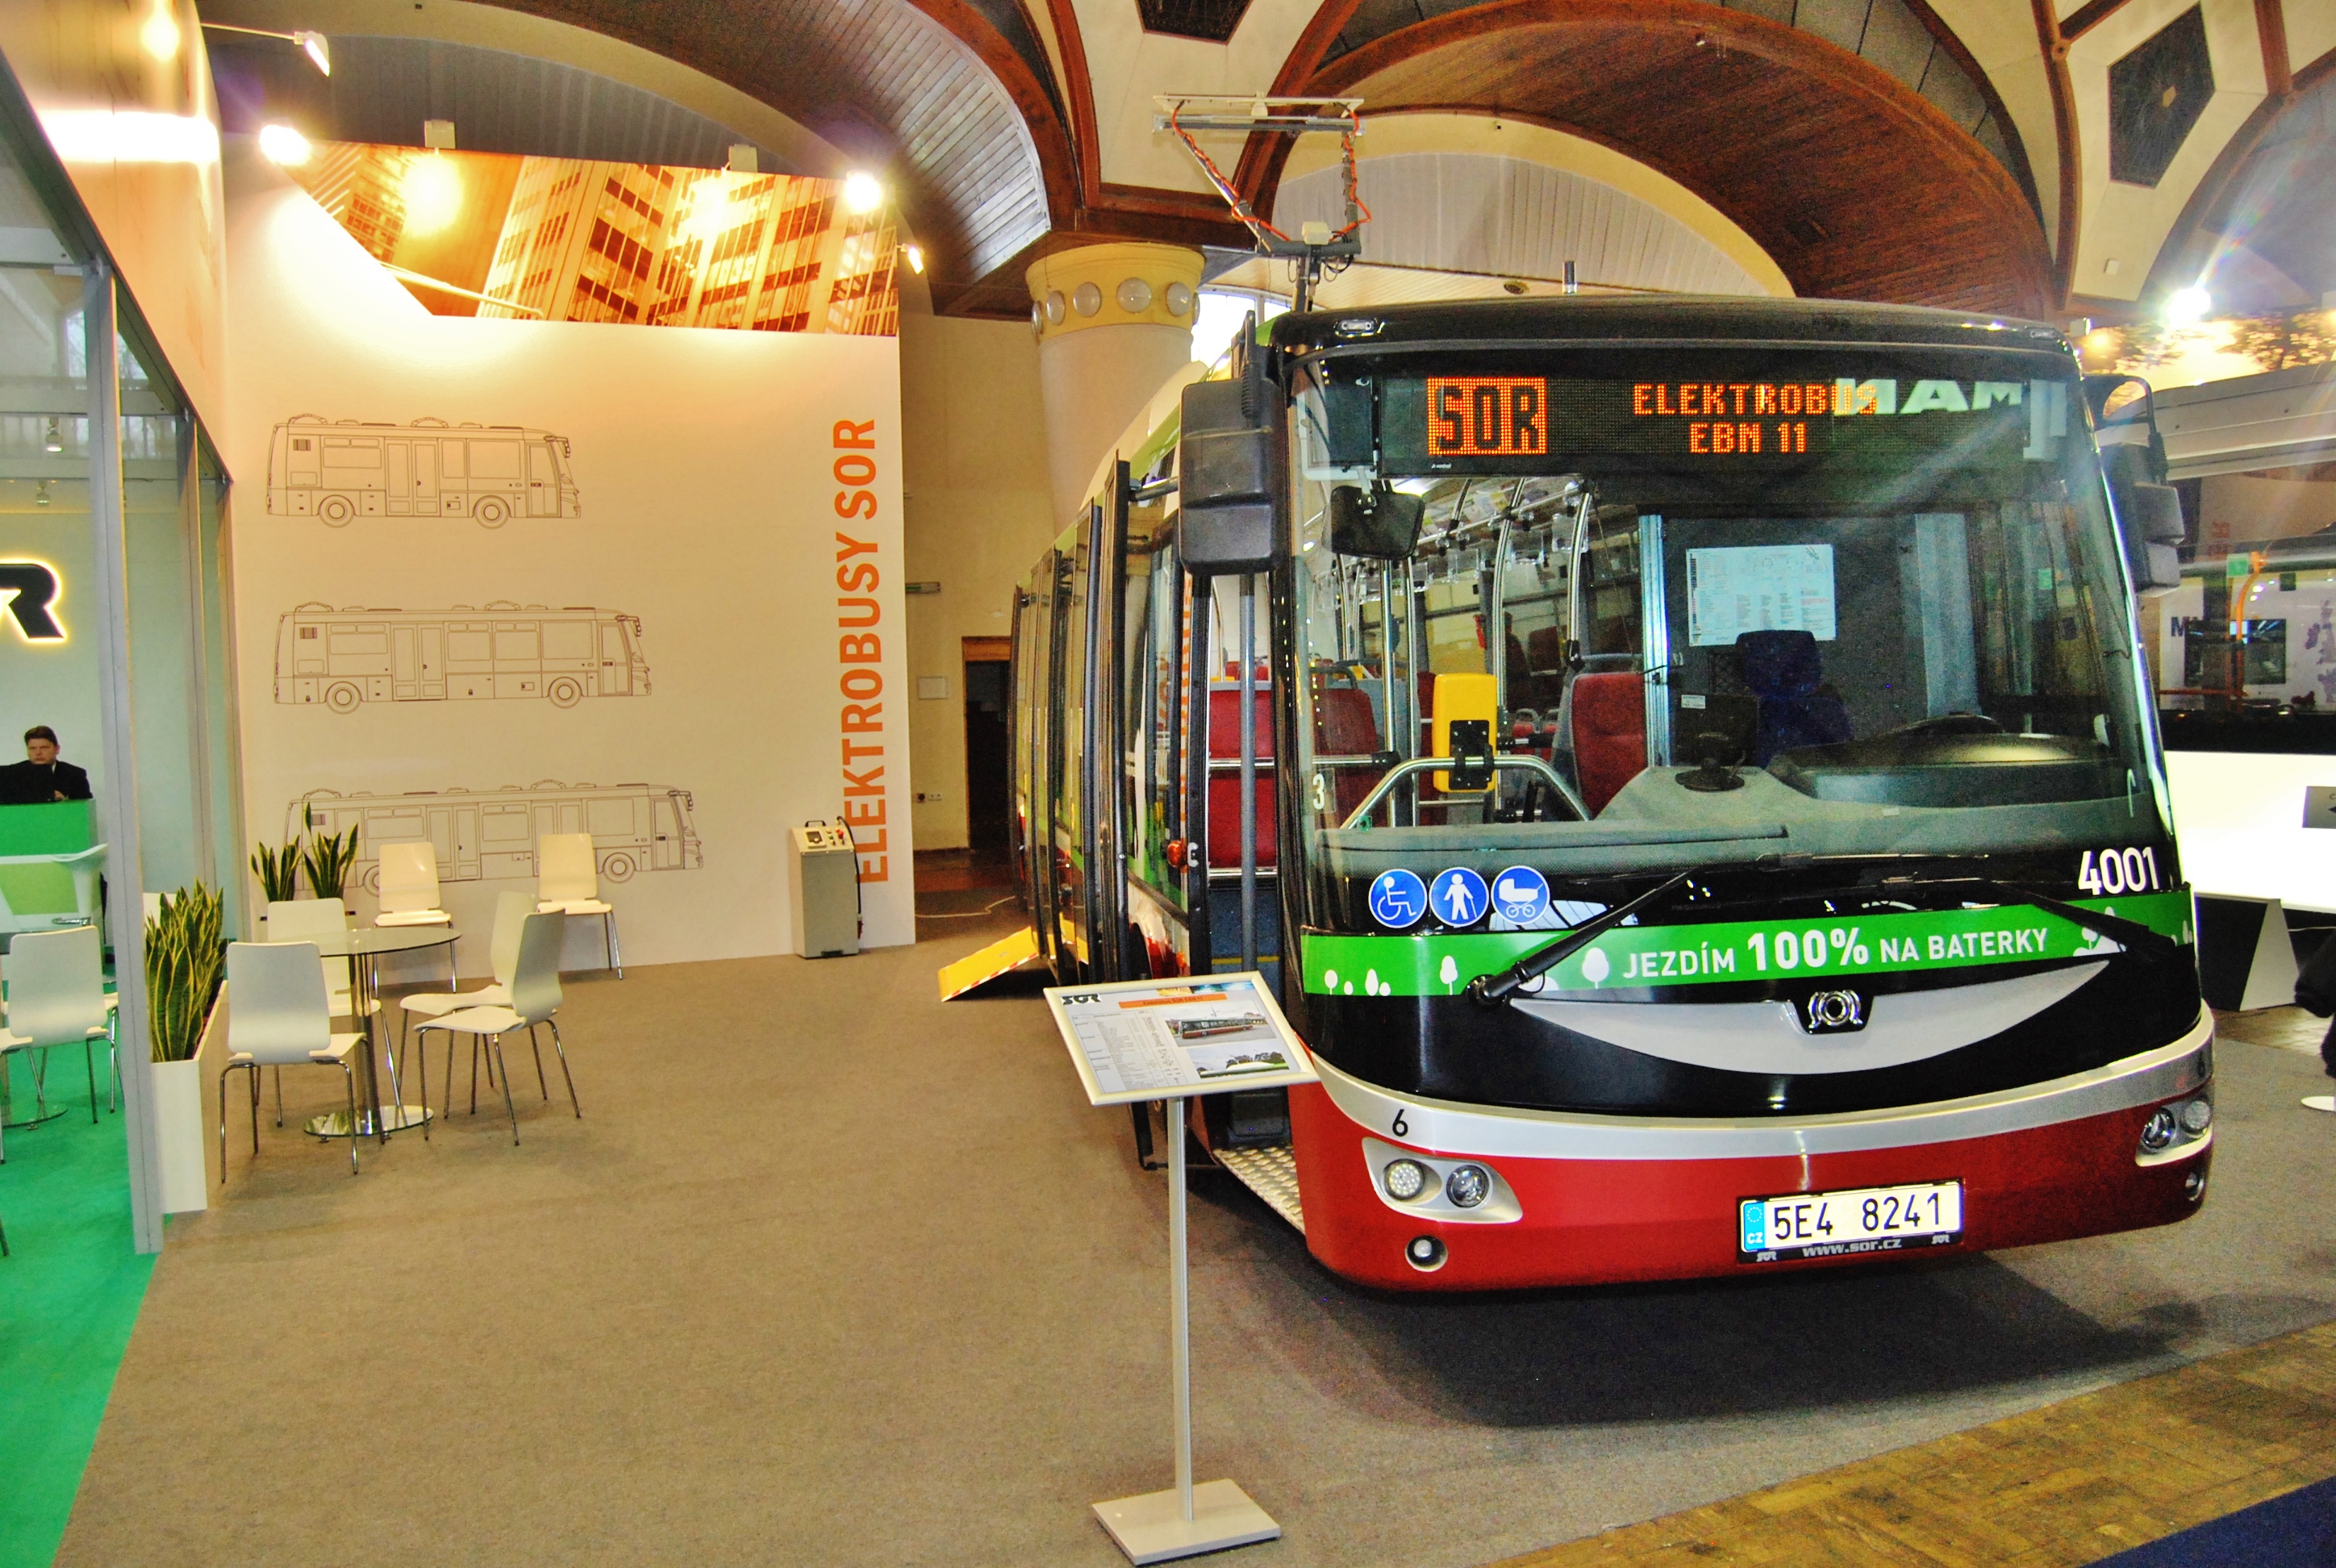 SOR - Czechbus 2015 4